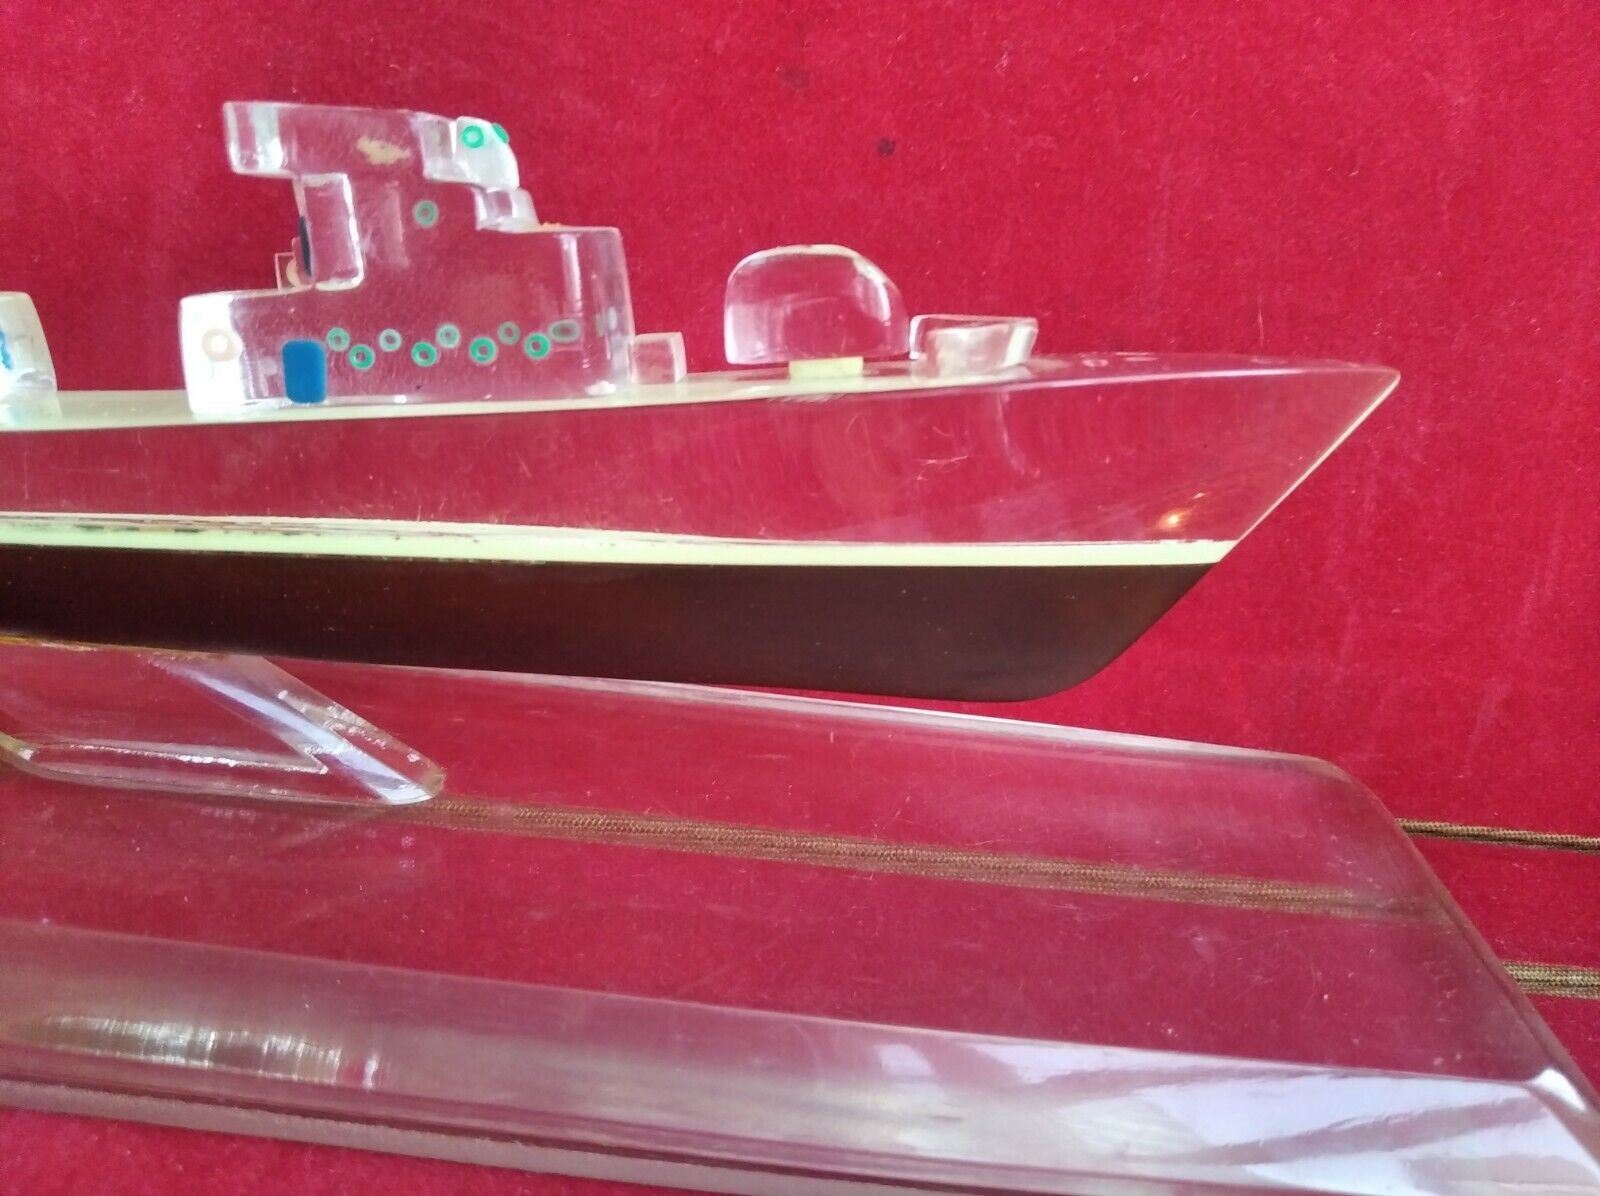 Rare Interesting Ship model plexiglass navy battle ship glowing in the dark